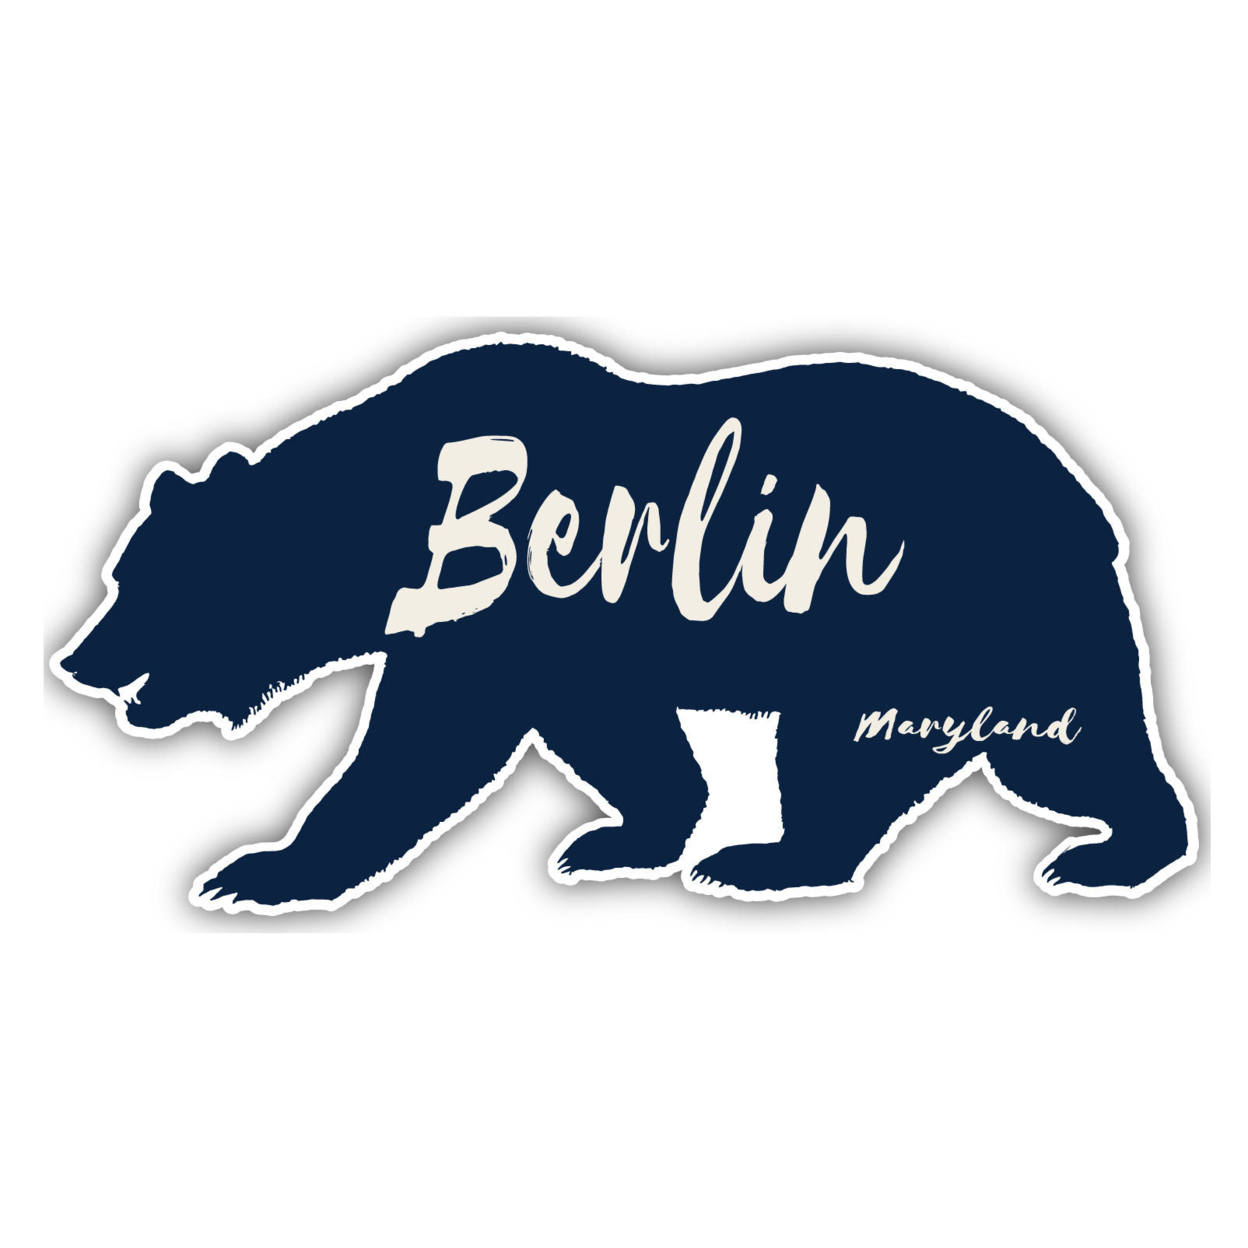 Berlin Maryland Souvenir Decorative Stickers (Choose Theme And Size) - Single Unit, 4-Inch, Bear